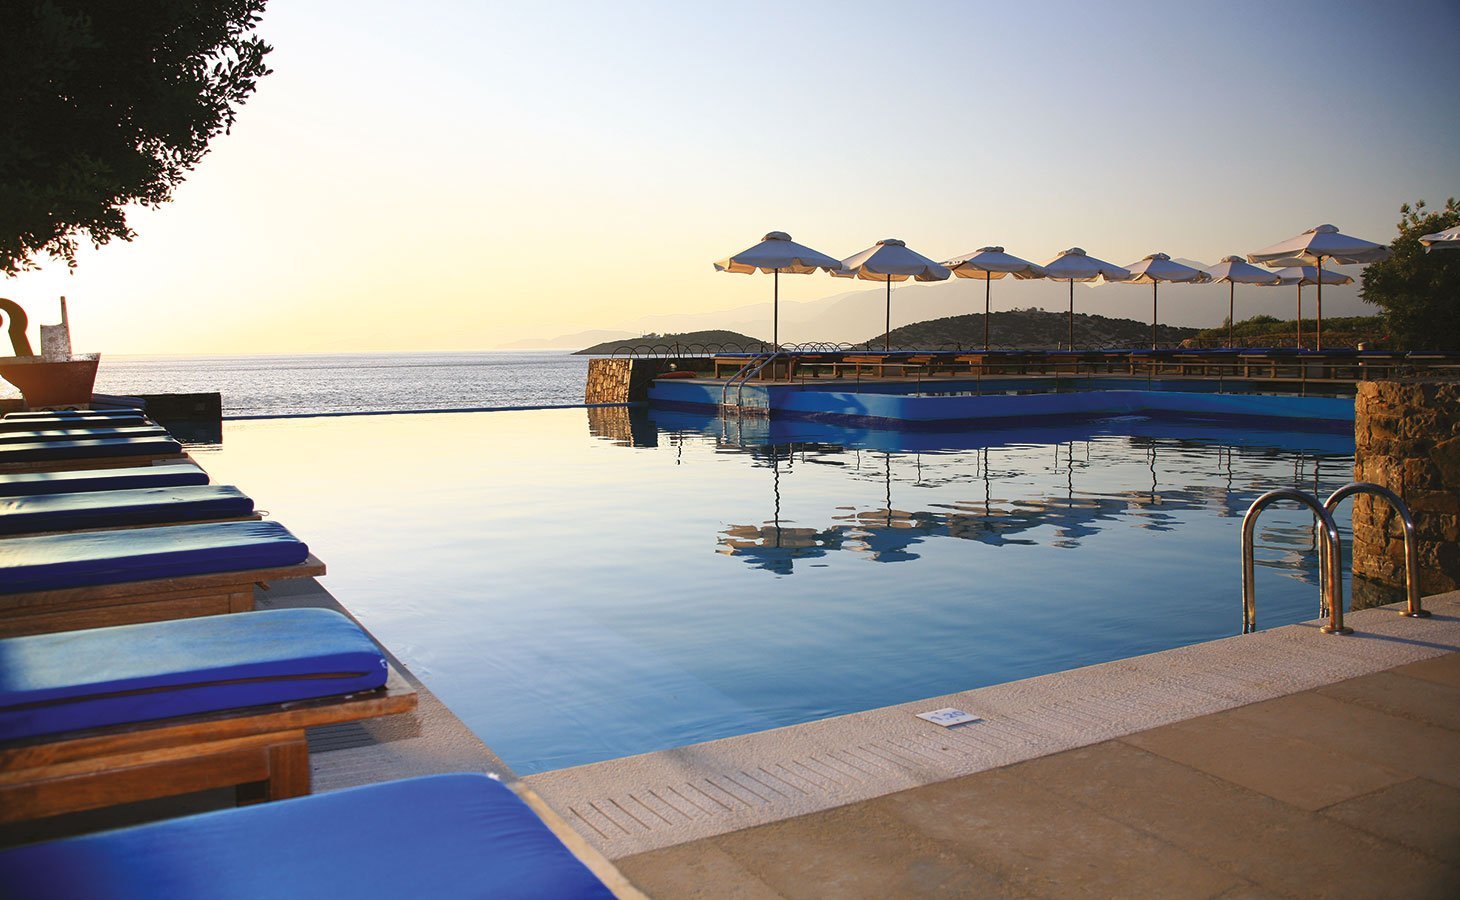 St Nicolas Bay Luxury Hotel & Villa in Crete, Greece.